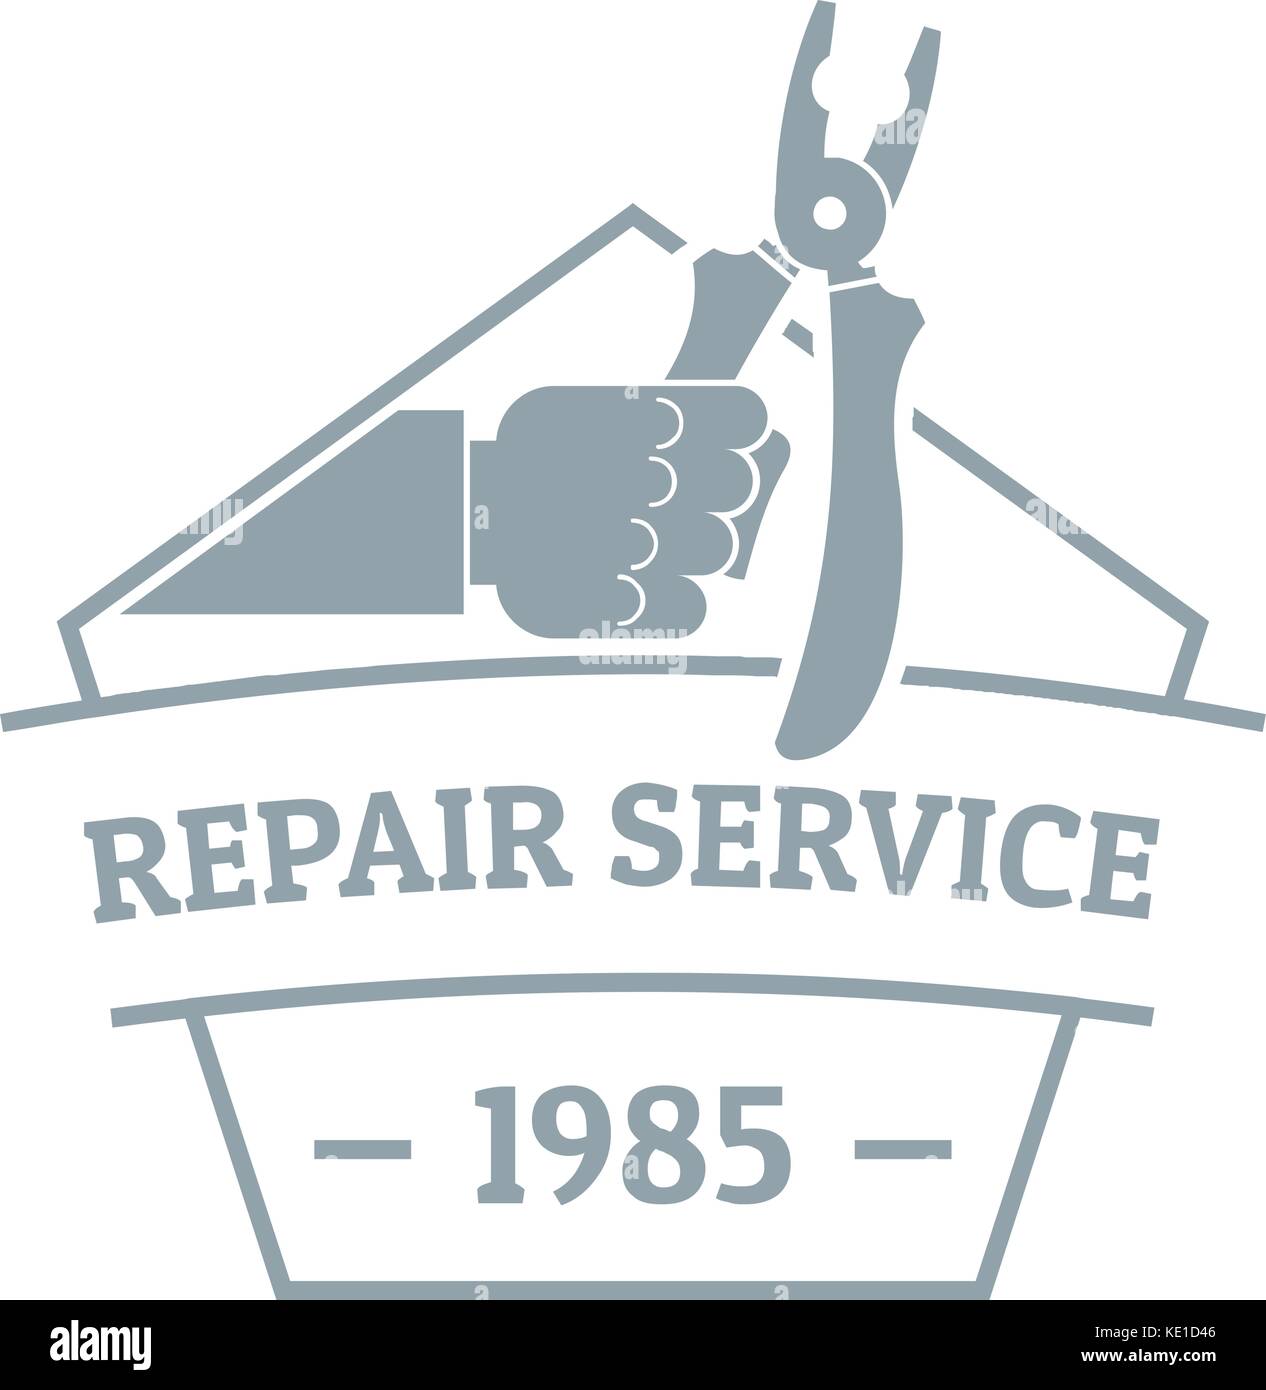 Repair service logo, vintage style Stock Vector